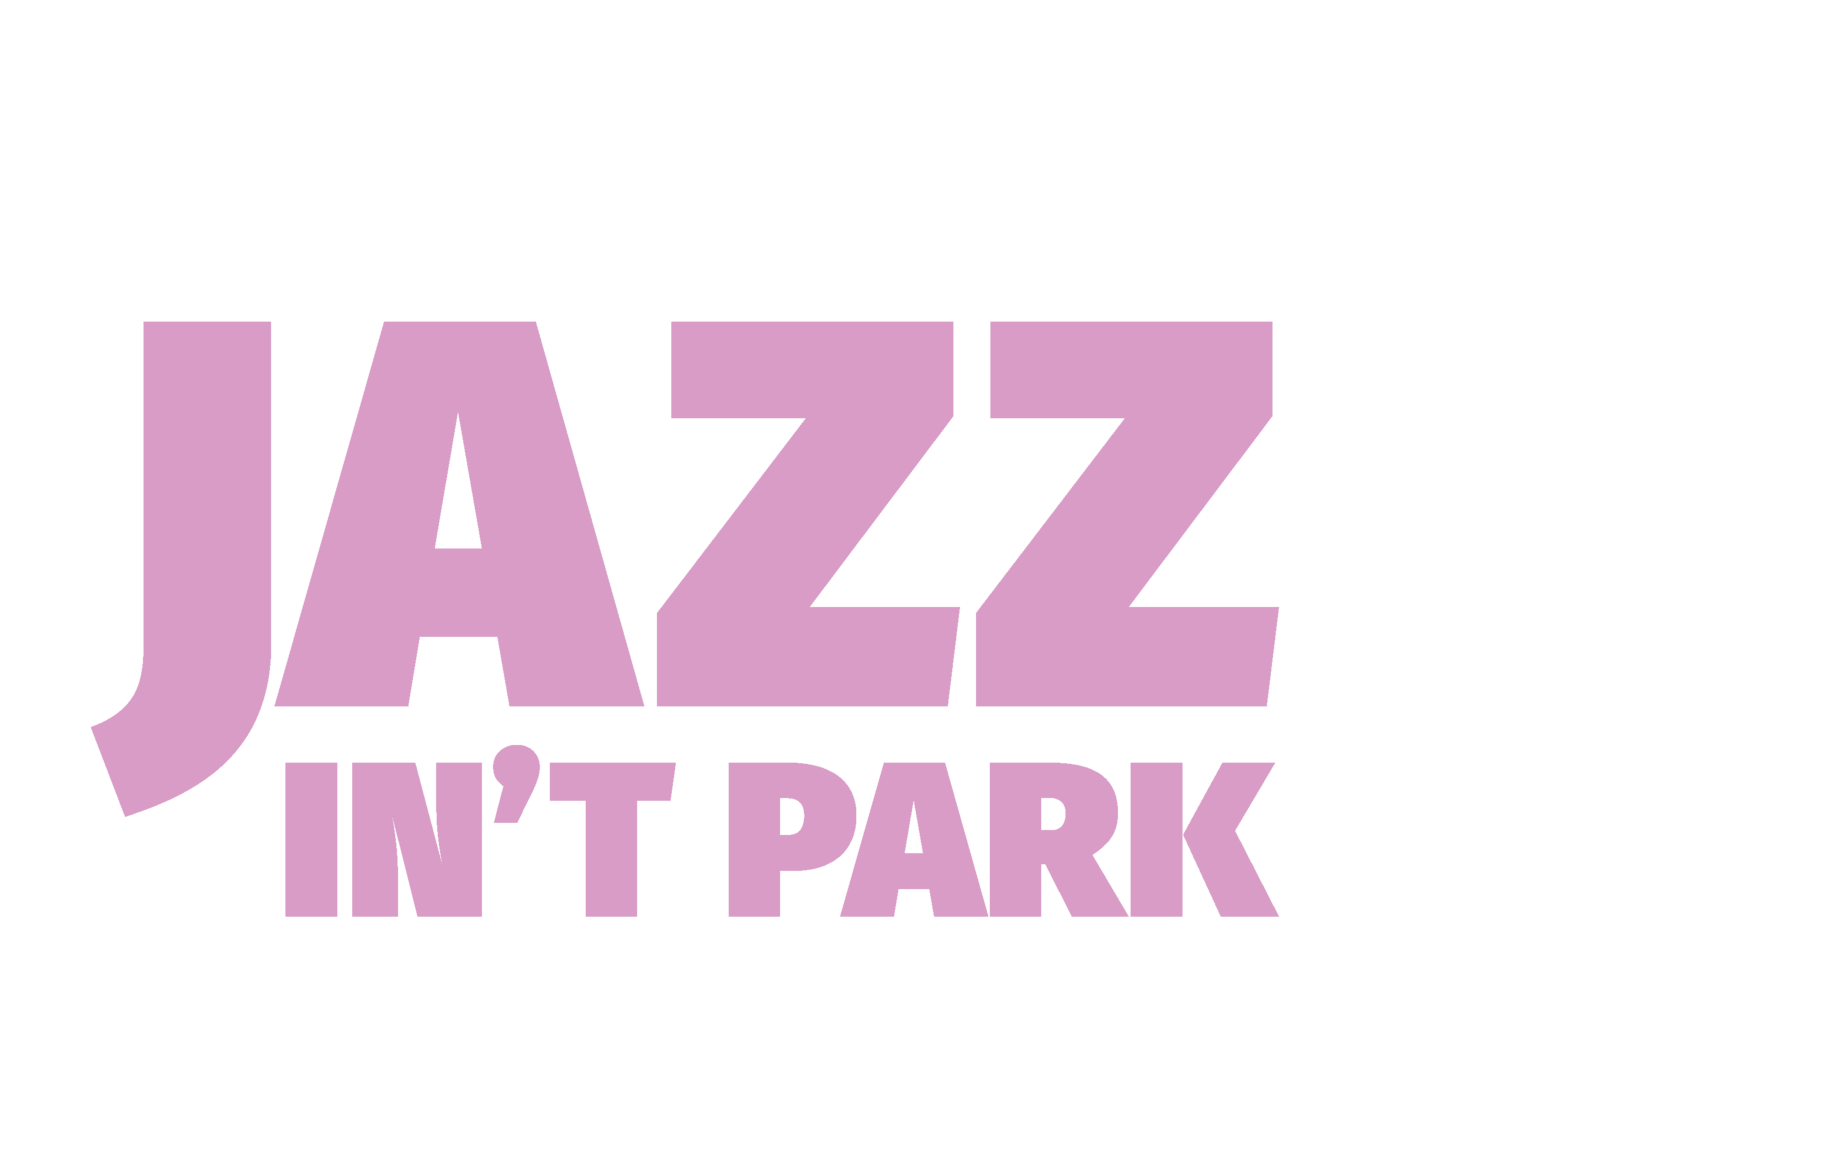 Jazz in 't park